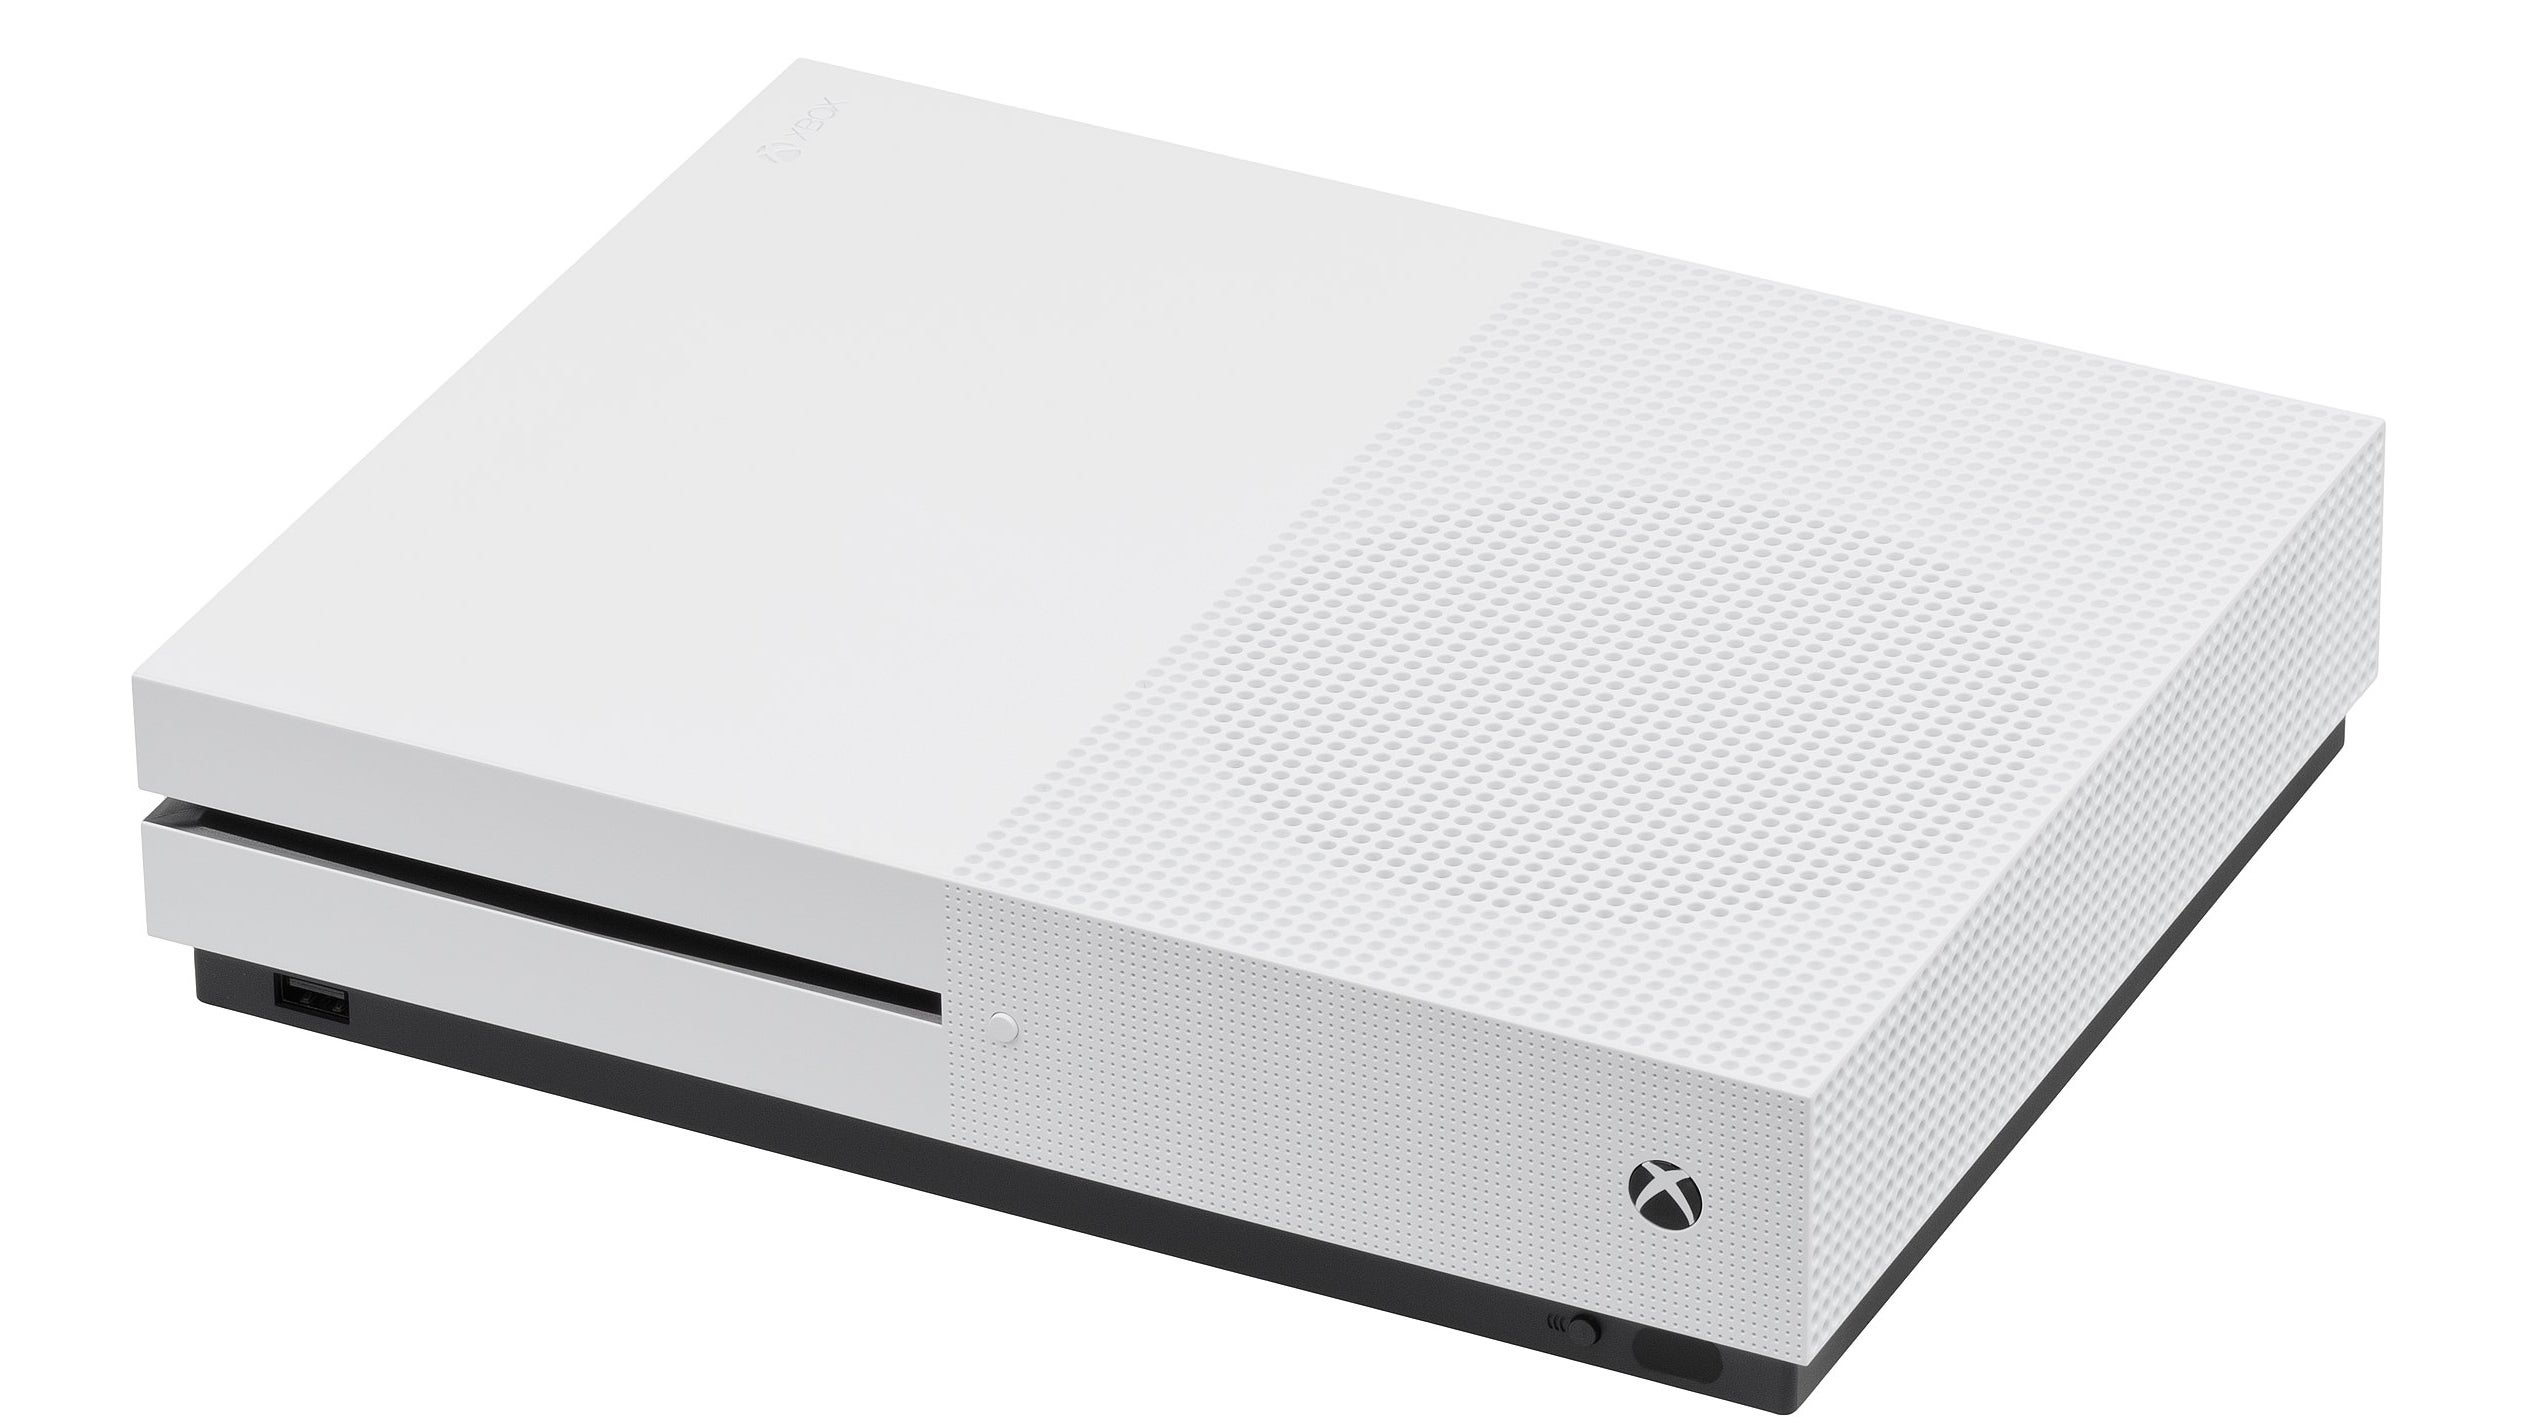 Microsoft descontinúa todas las consolas Xbox One | Eurogamer.es